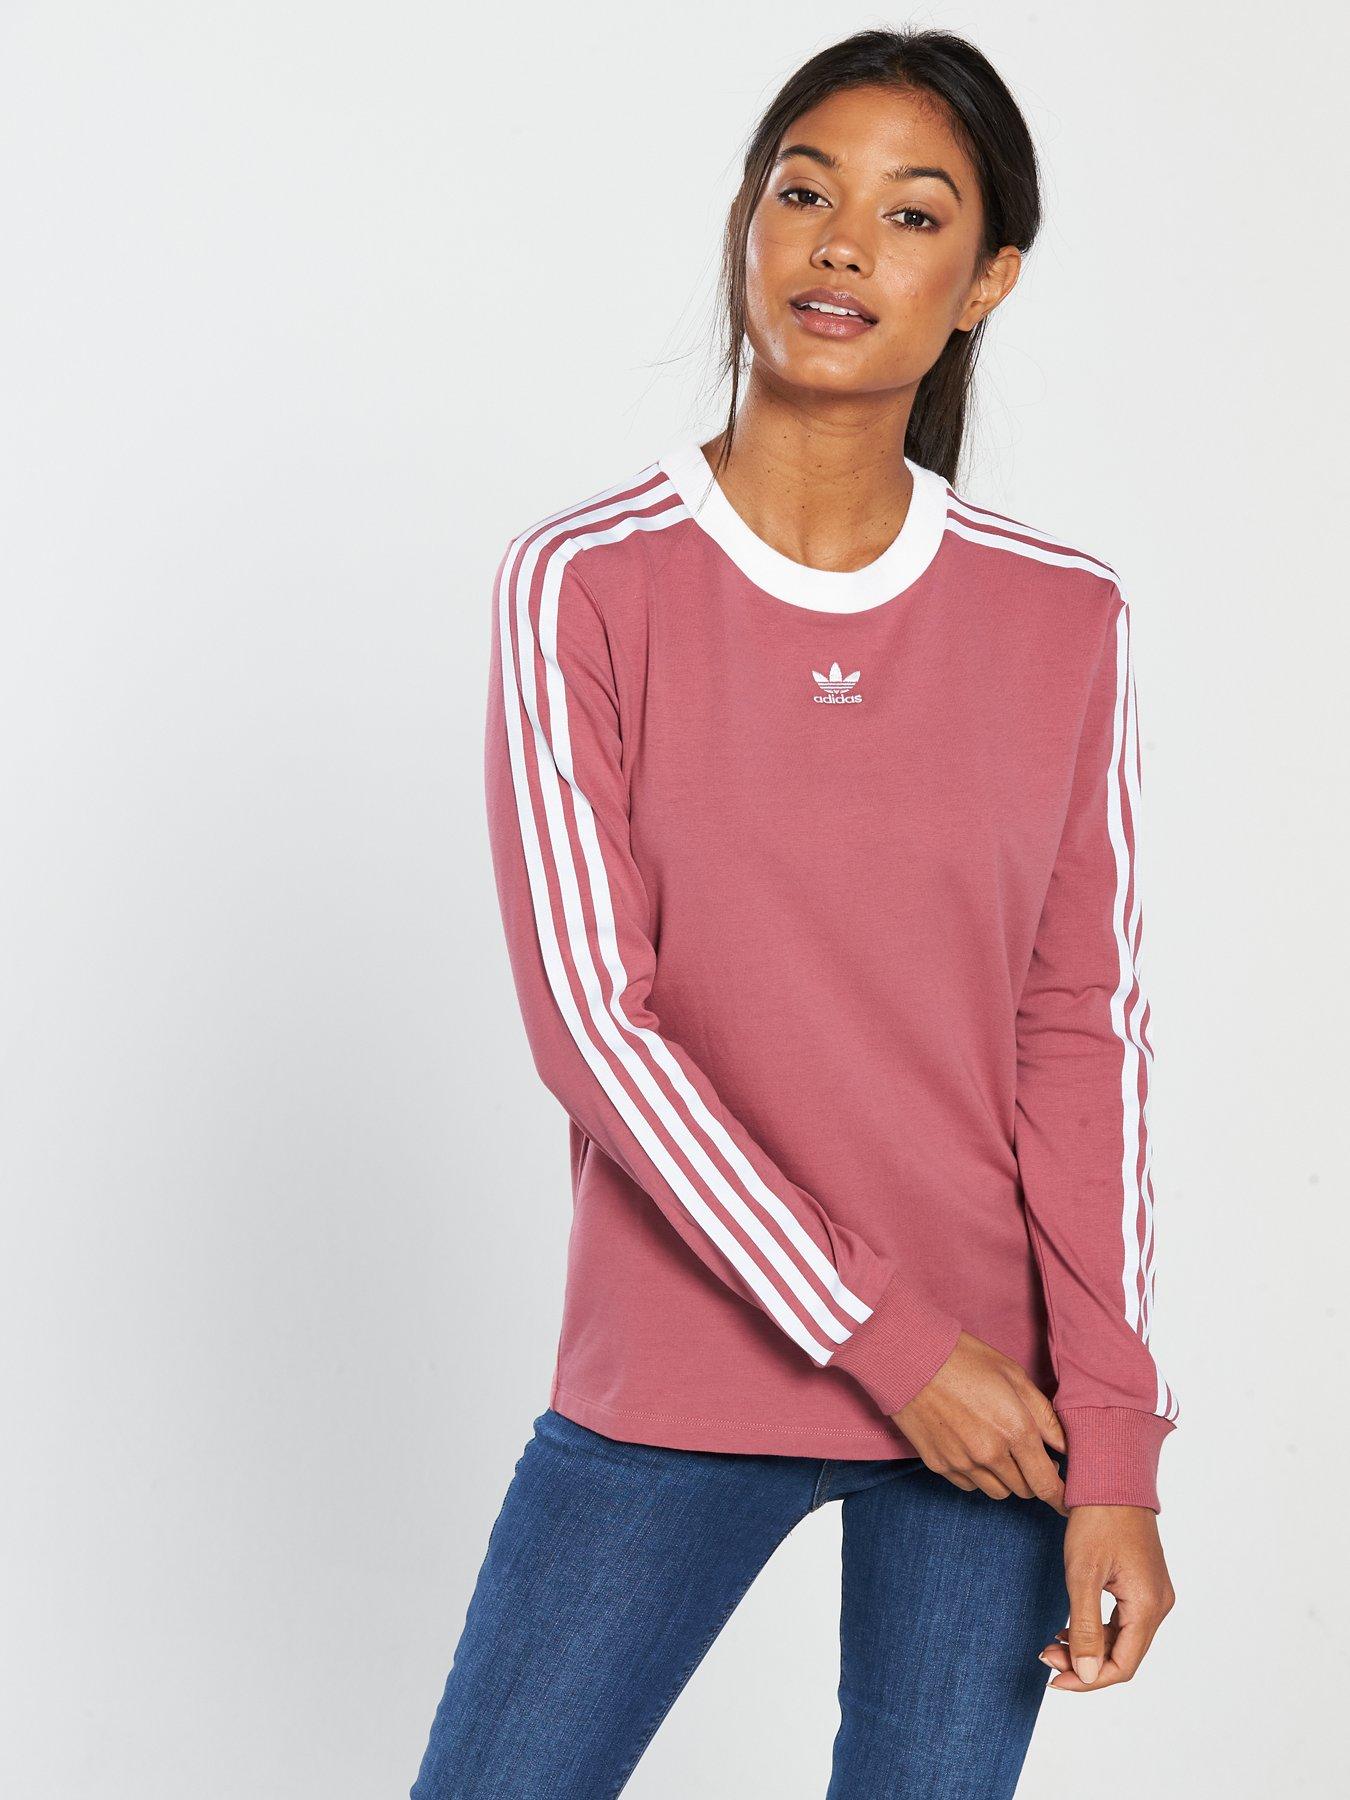 long sleeve pink adidas top